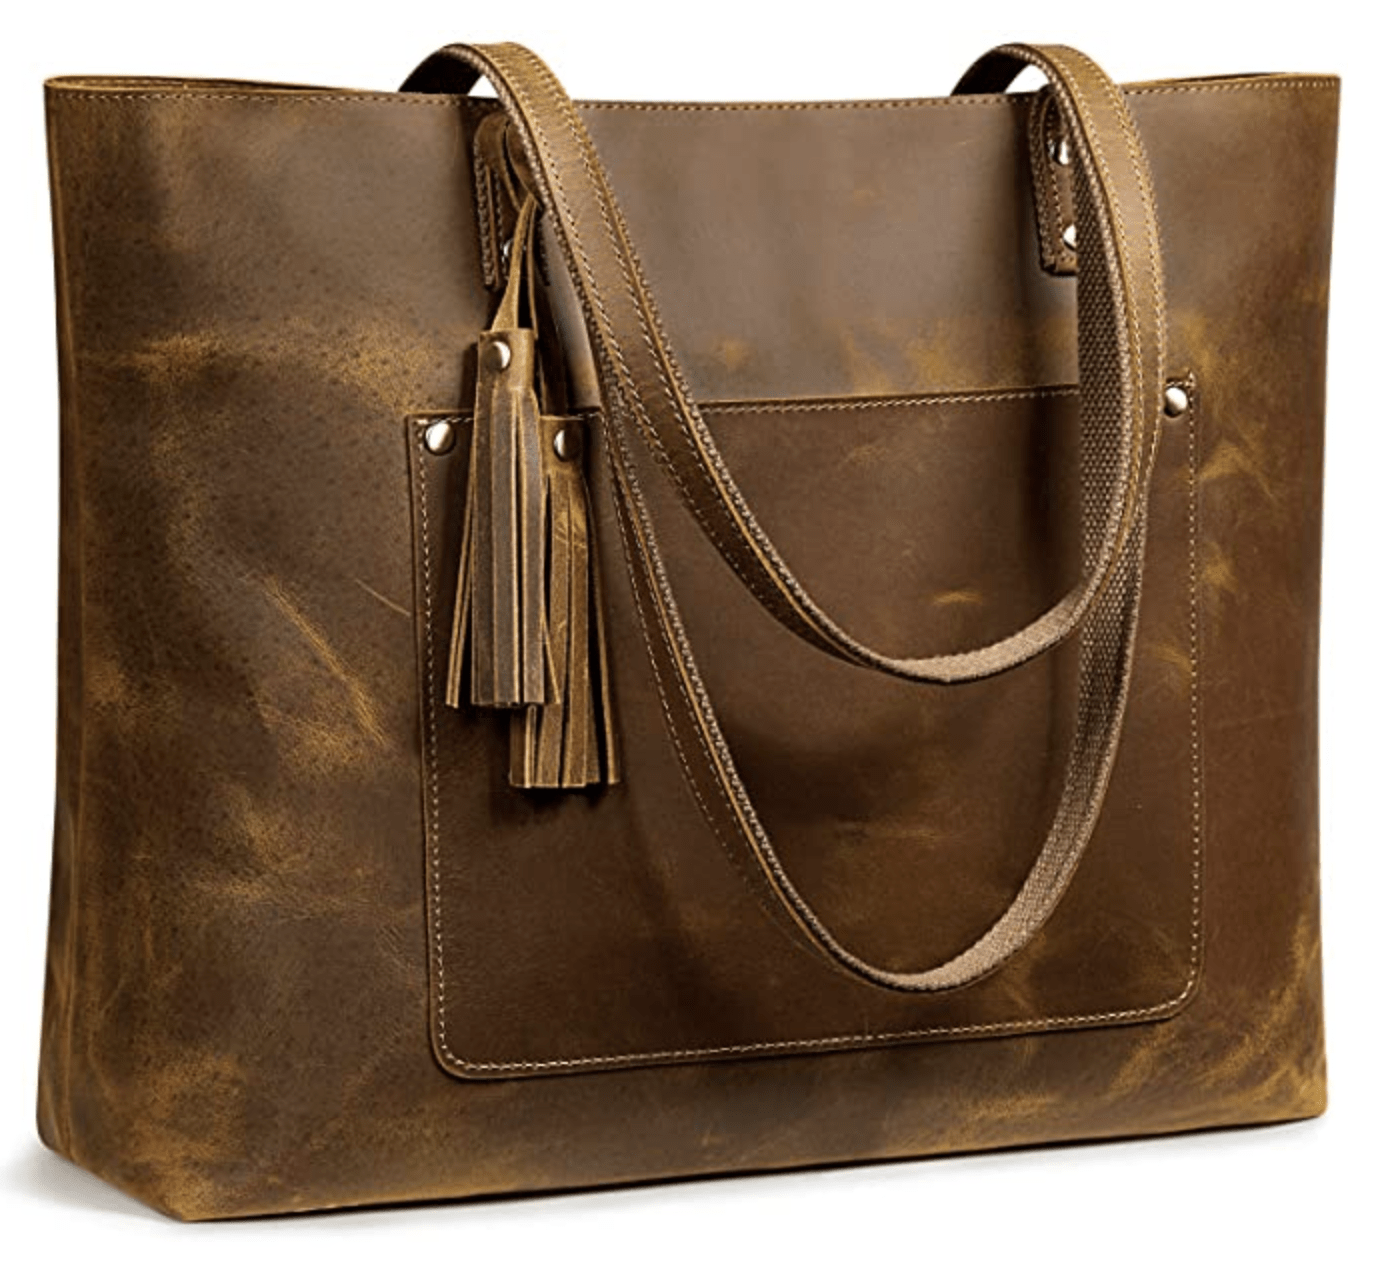 Vintage Evie Leather Tote Bag (PROMO77)